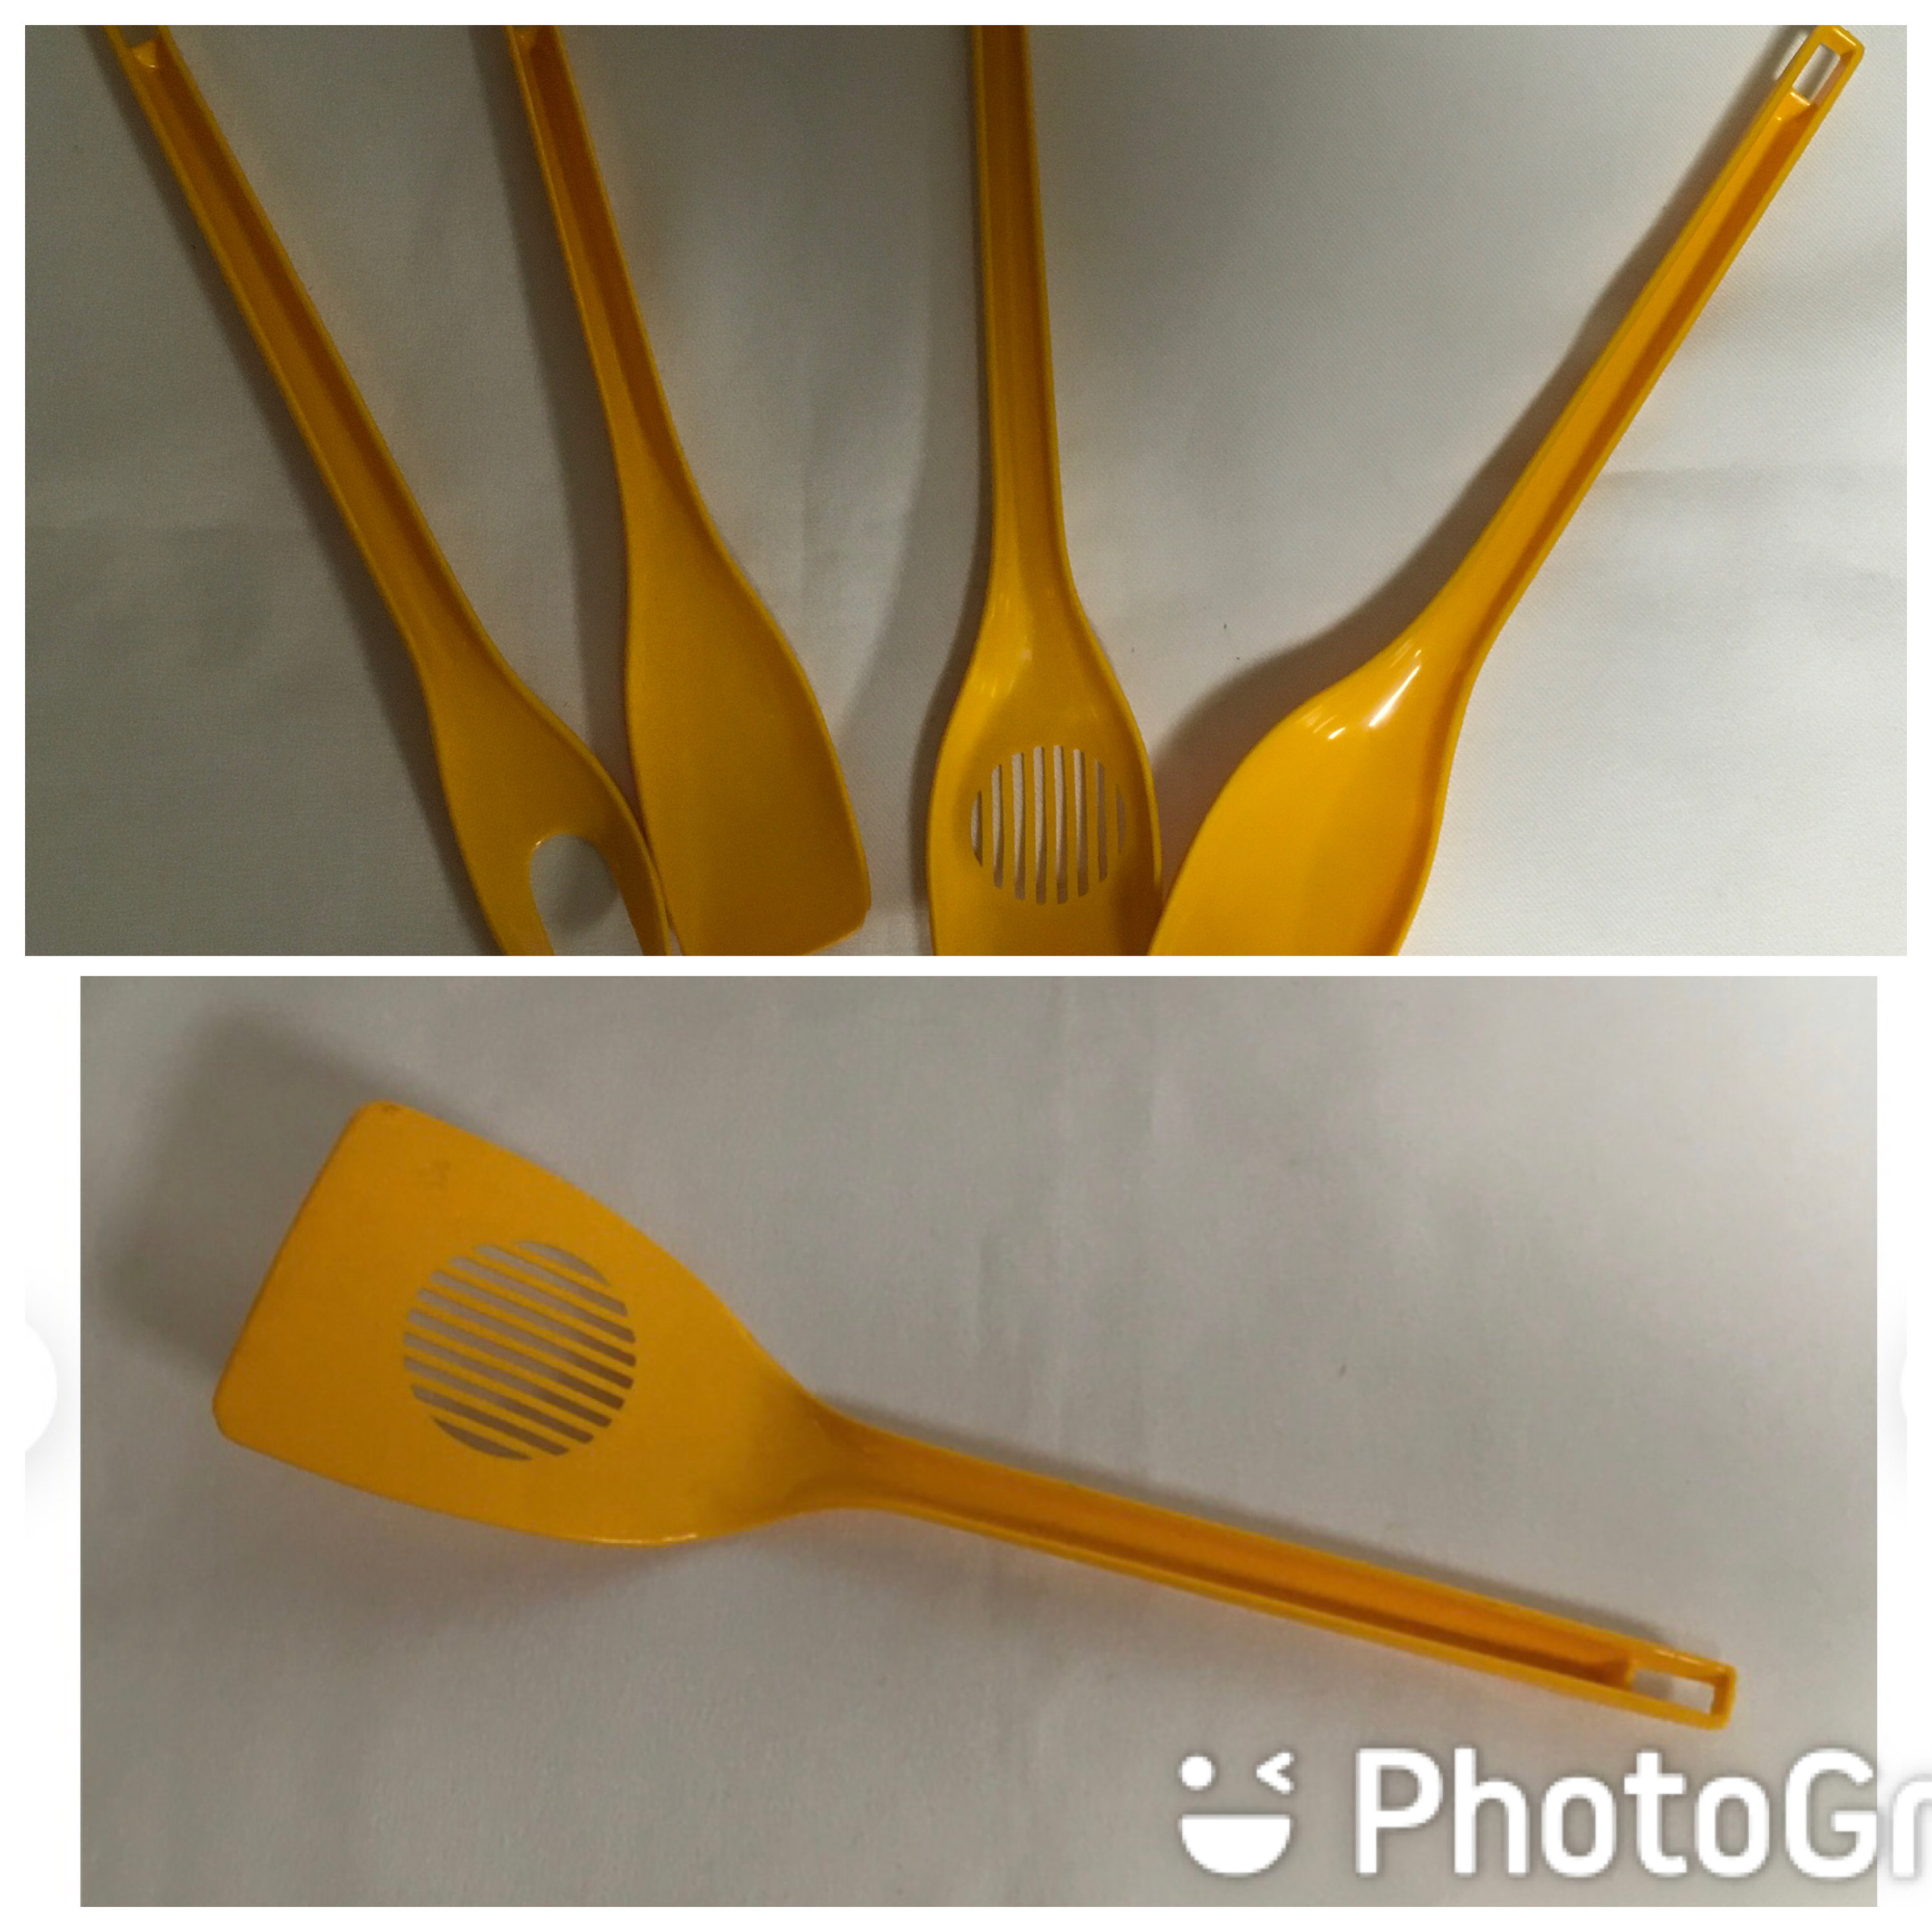 Zeroll Silicone Set Kitchen Utensil Tools Spatula Lattle, & Spoon Orange